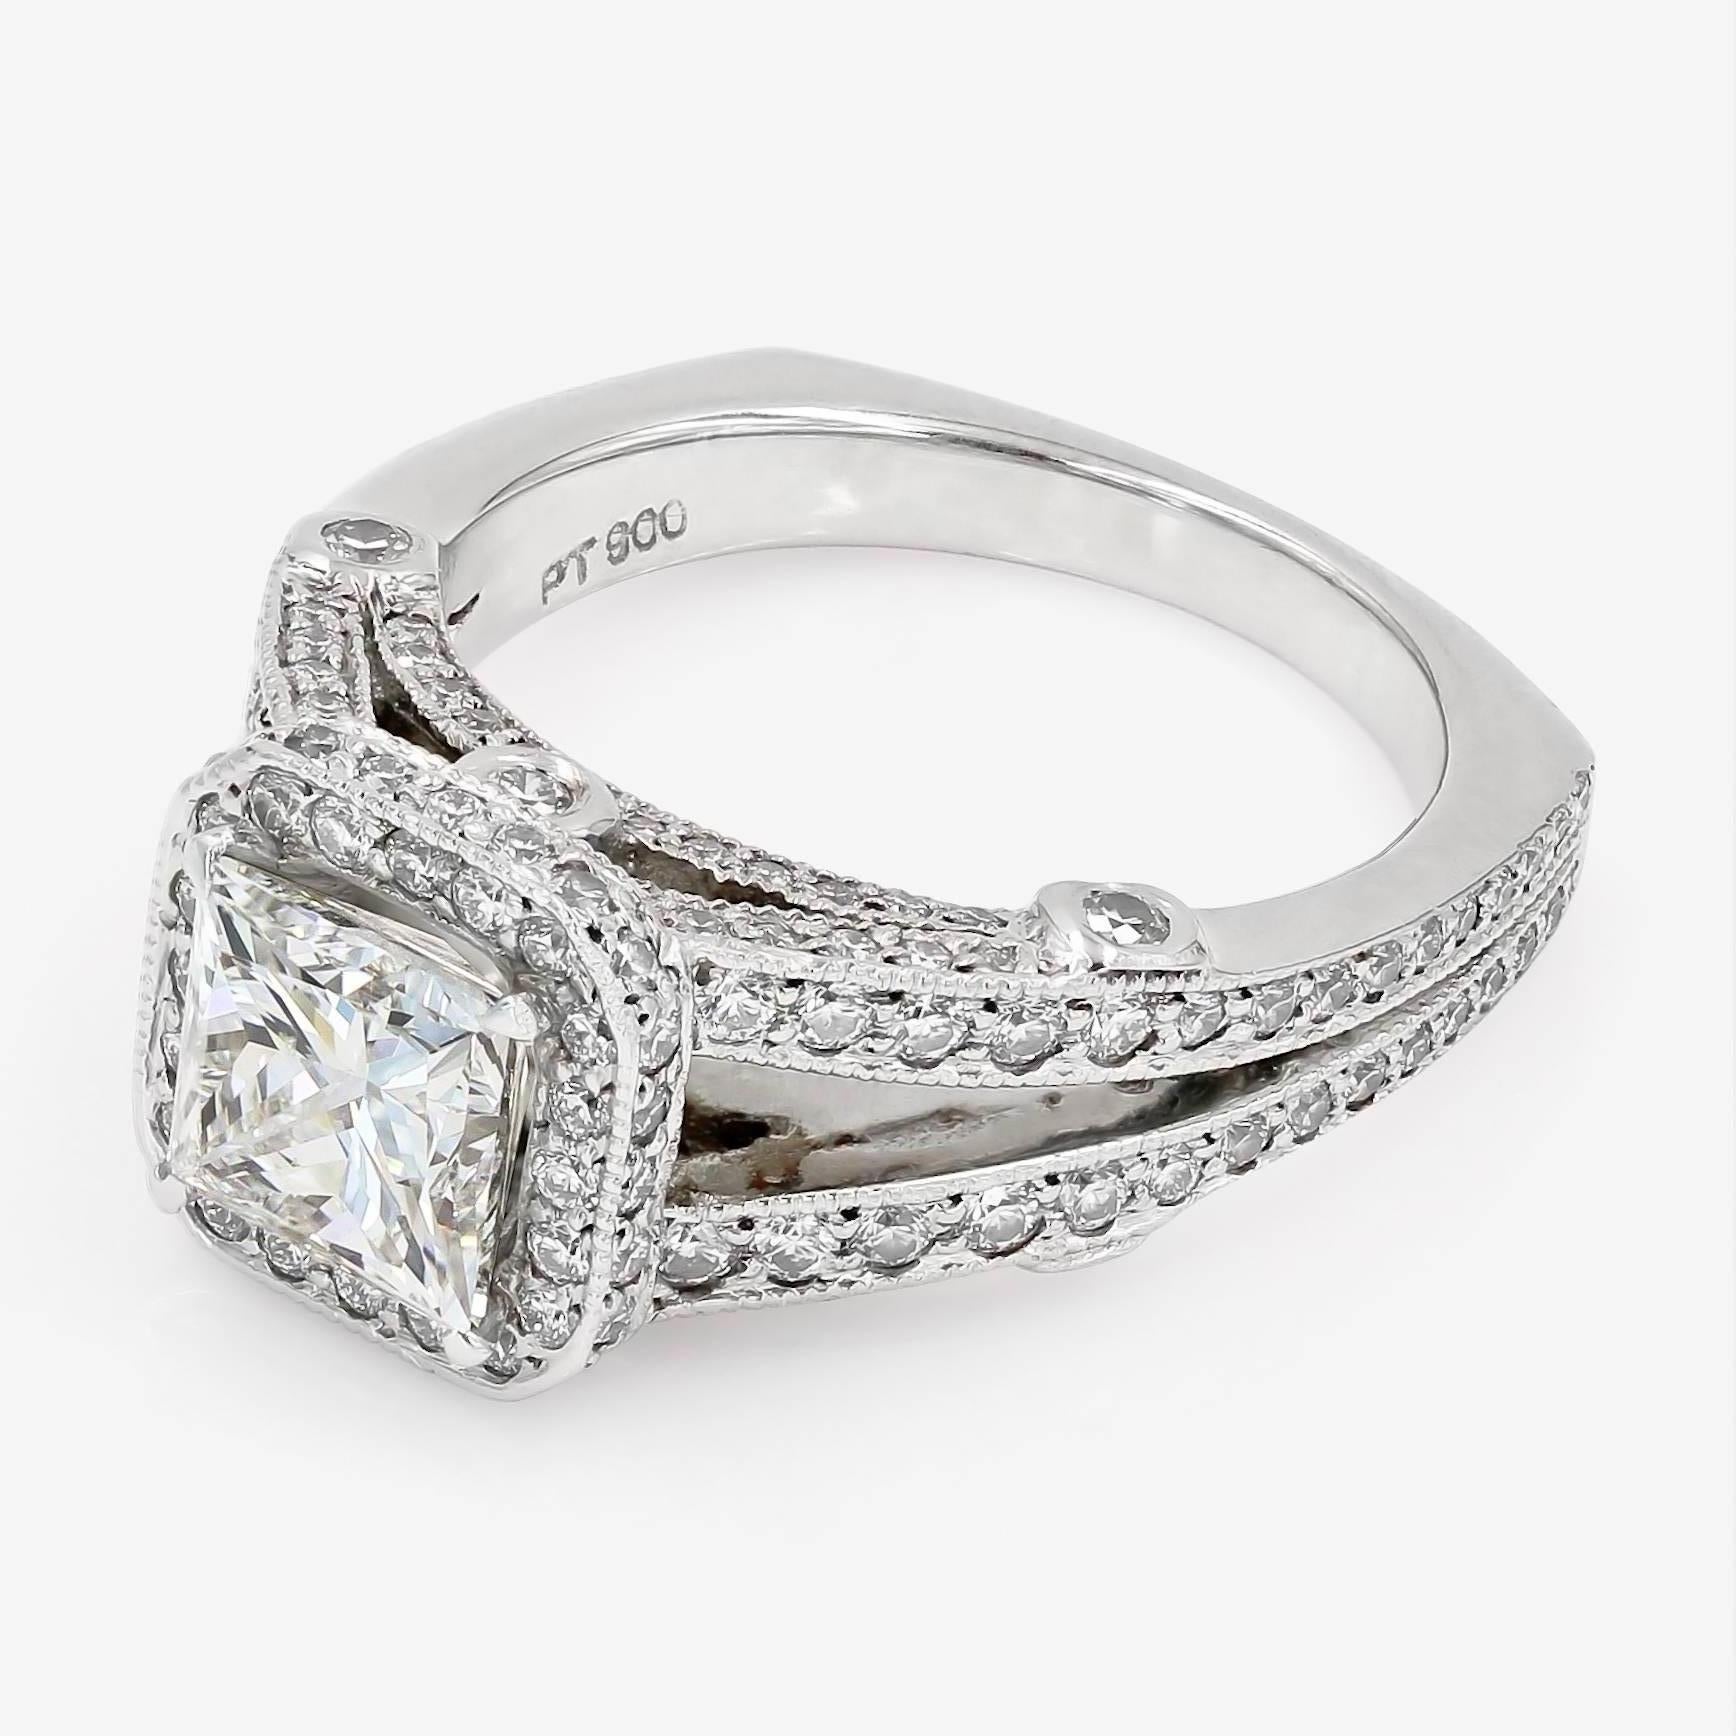 Women's GIA Certified 1.57 Carat Princess Cut Diamond Engagement Ring